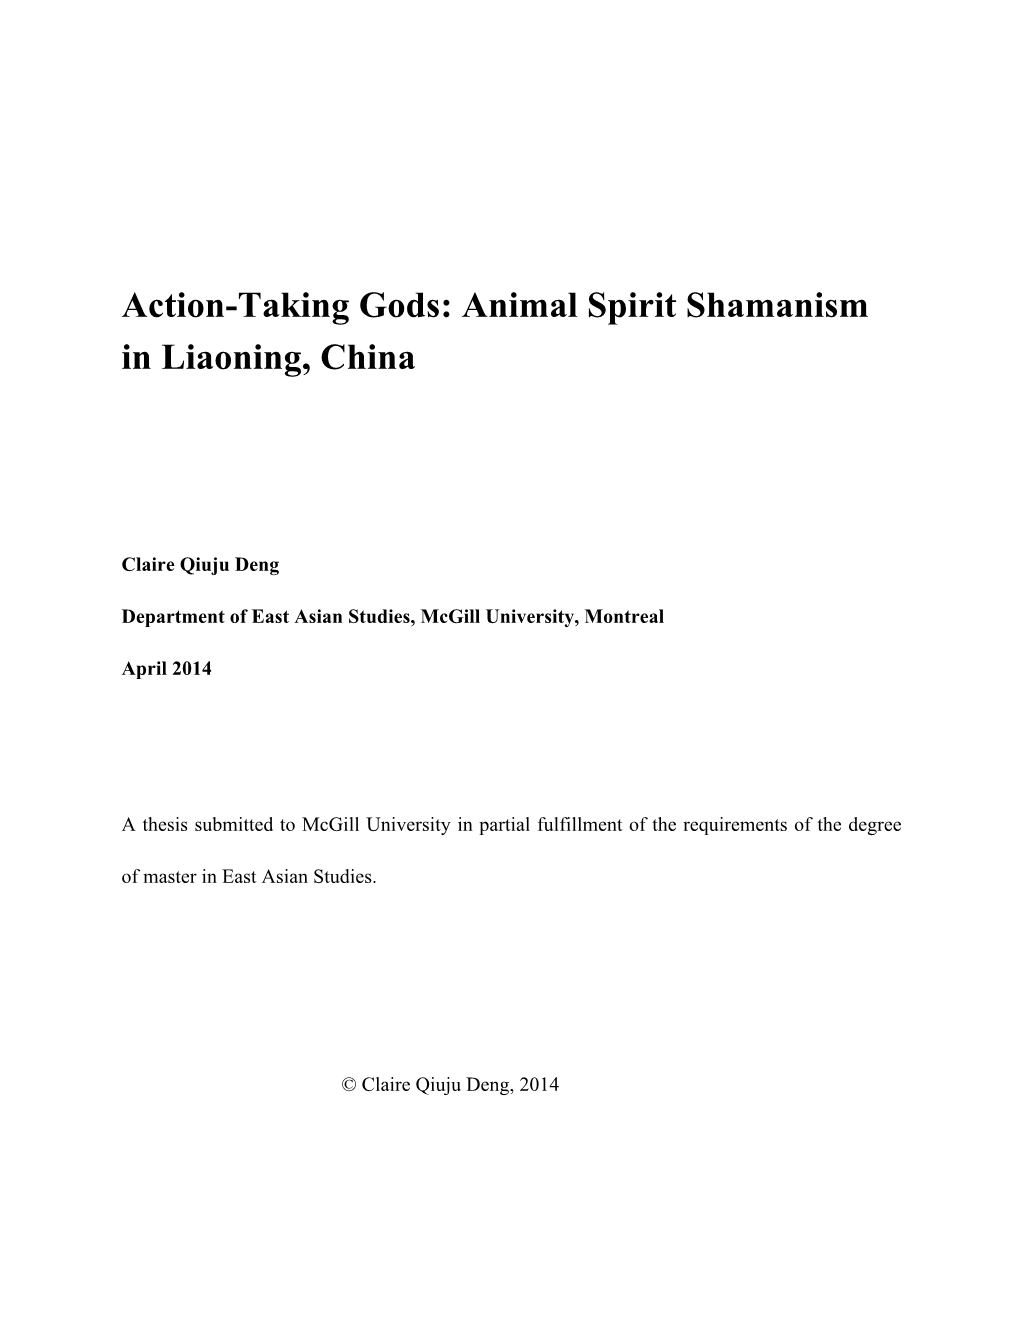 Animal Spirit Shamanism in Liaoning, China